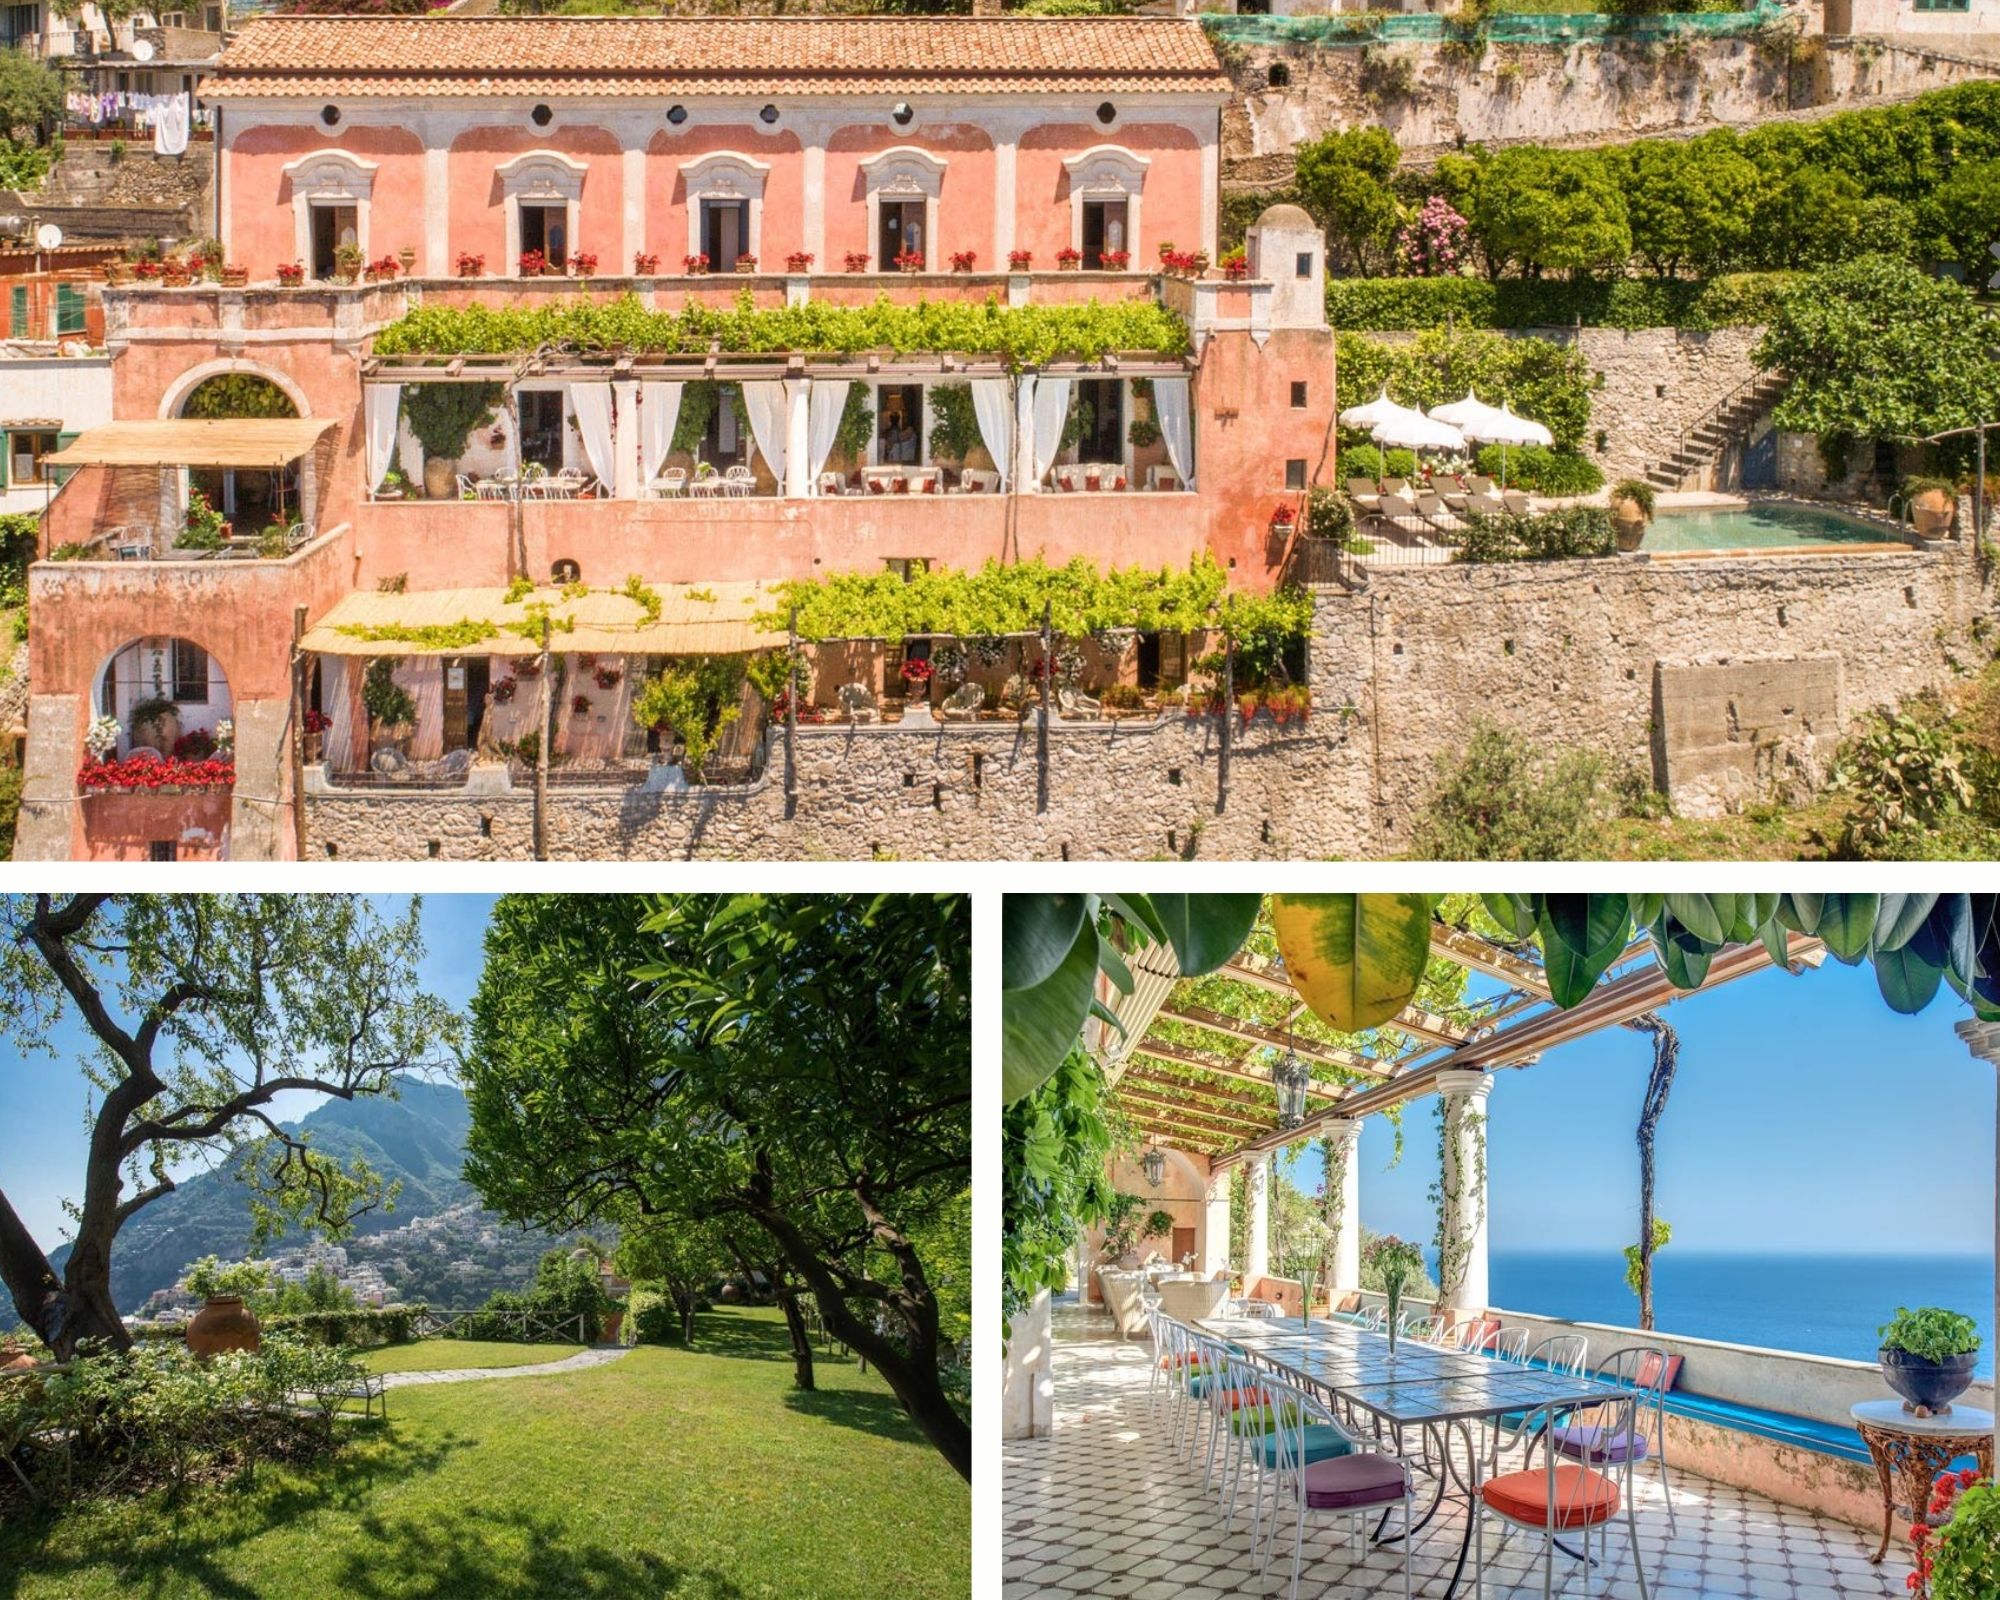 Villa San Giacomo-location per matrimoni Positano-Costiera Amalfitana